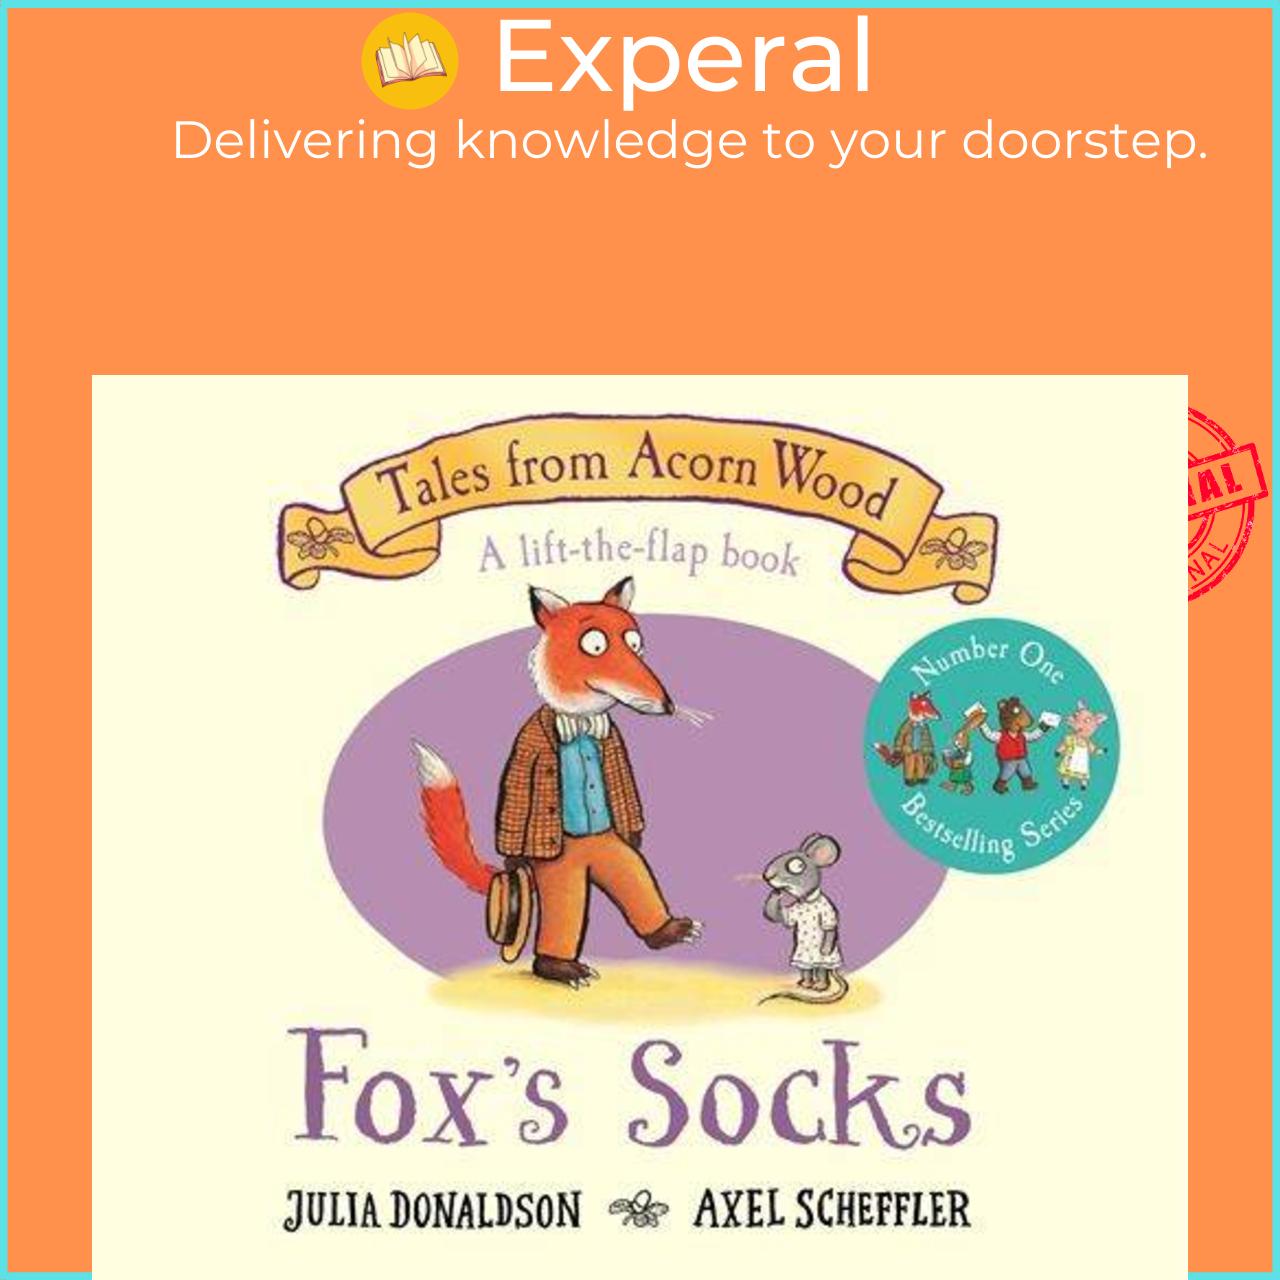 Sách - Fox's Socks - A Lift-the-flap Story by Julia Donaldson (UK edition, boardbook)